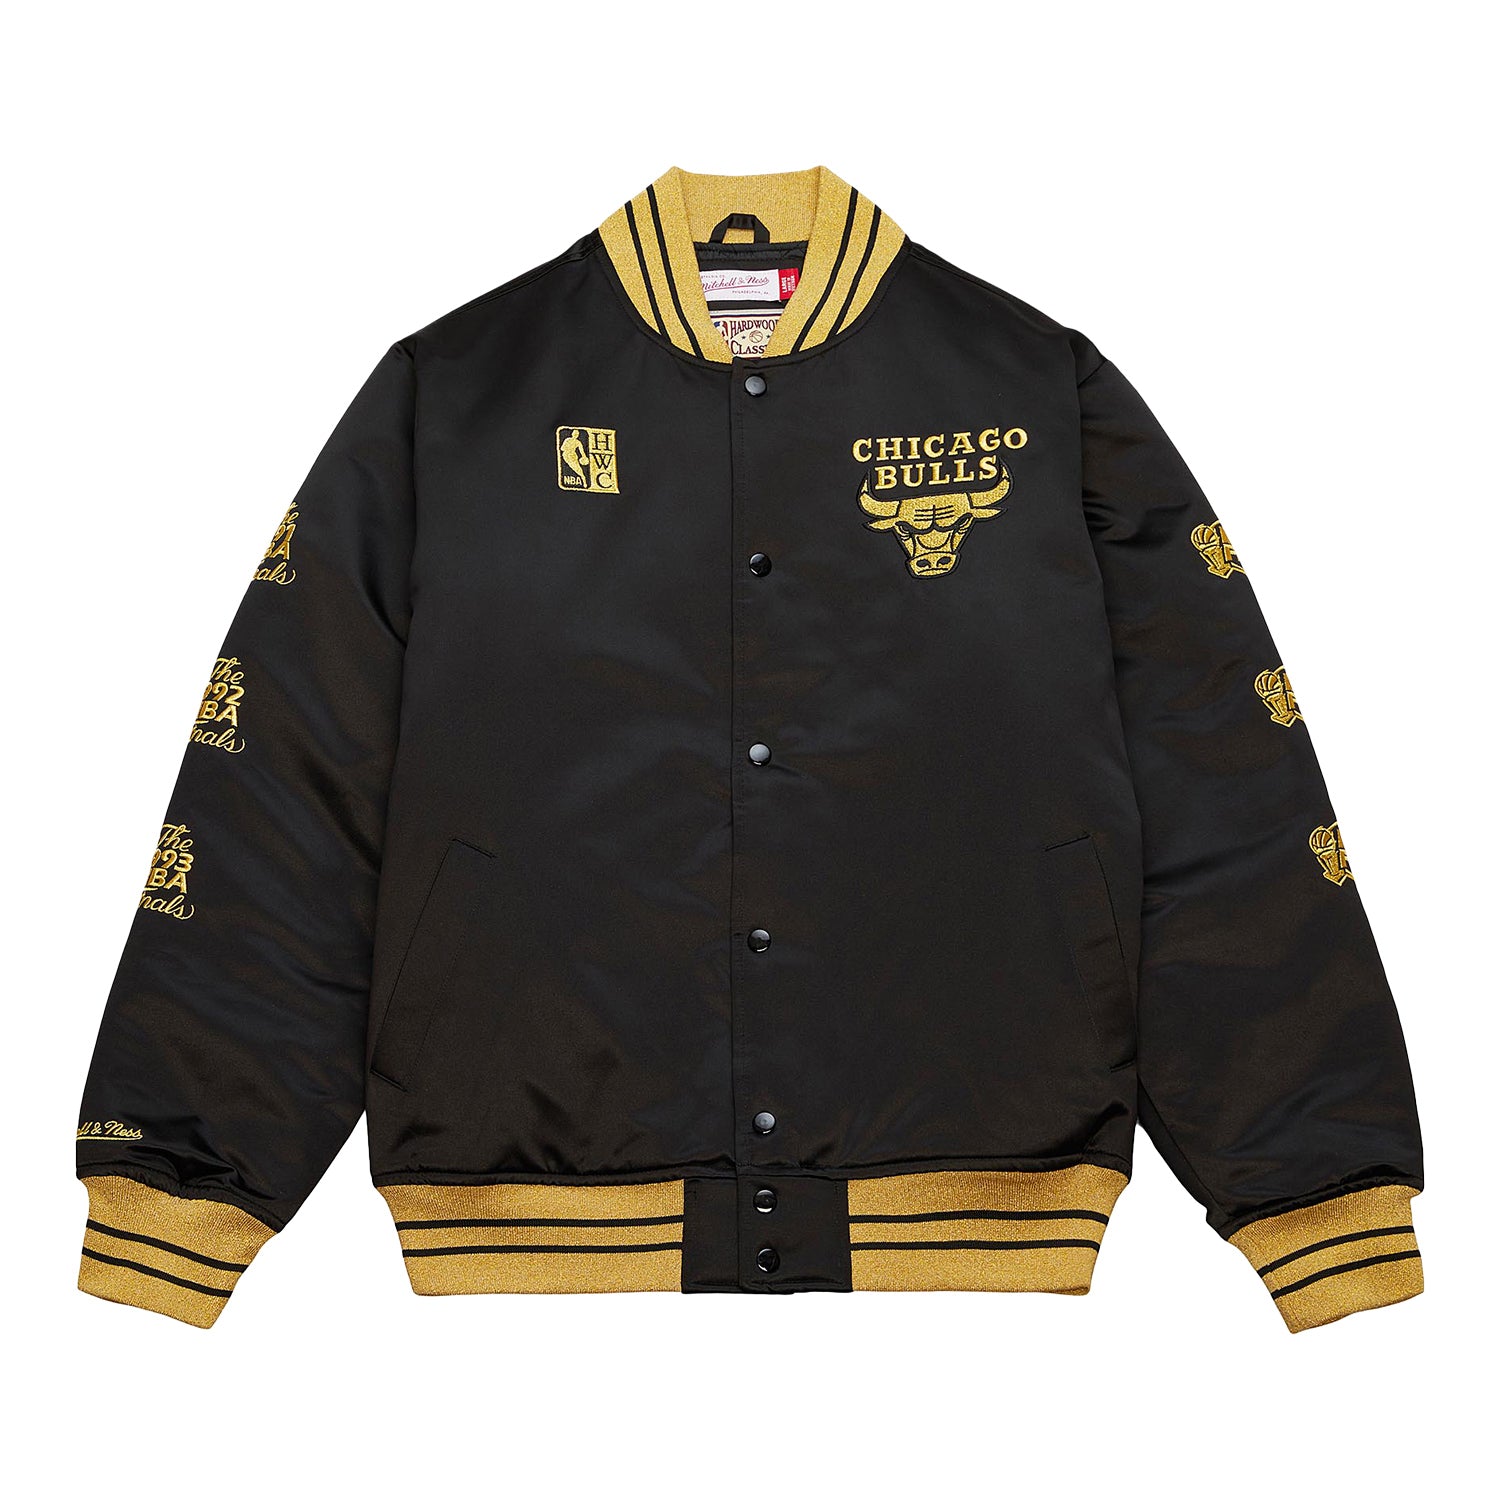 Windbreaker Jacket – MVP Clothing